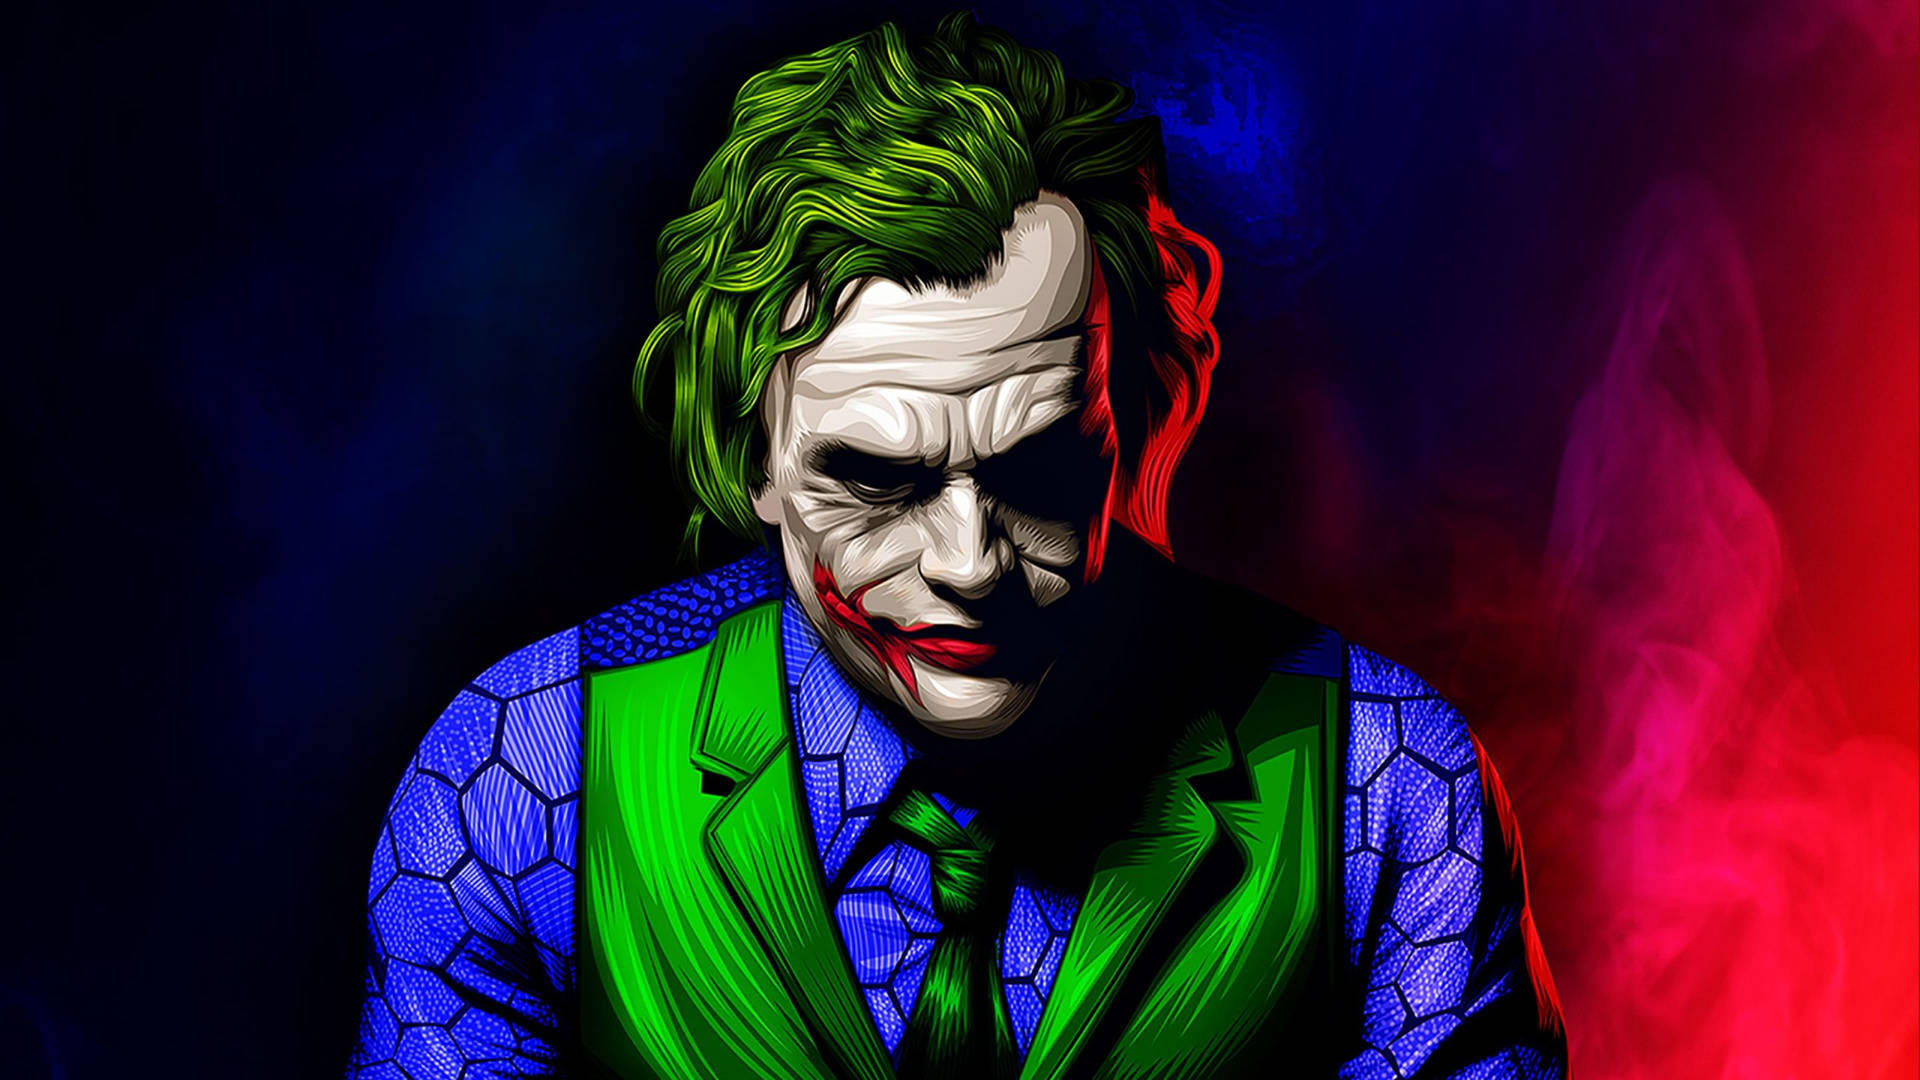 Cool Picture Of Joker Wallpaper